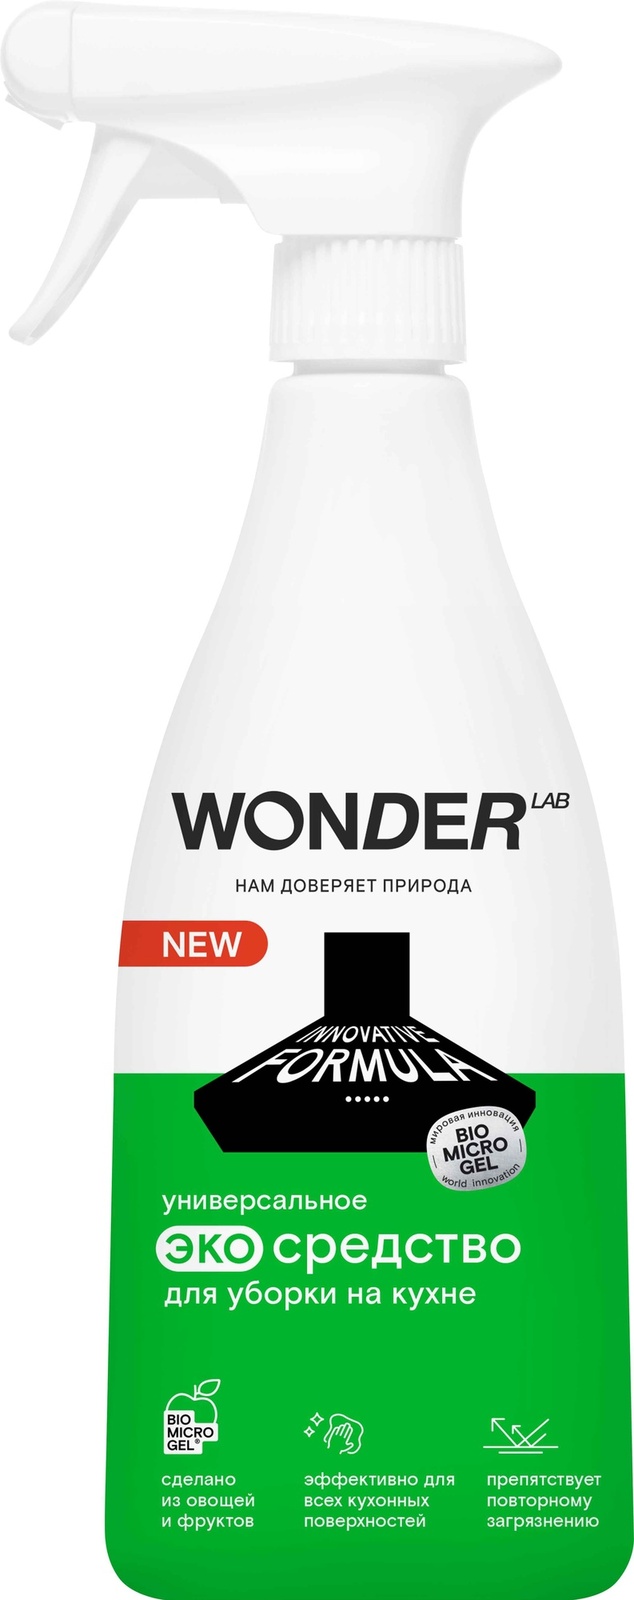 Wonder lab Wonder lab универсальное экосредство для уборки на кухне (550 г)